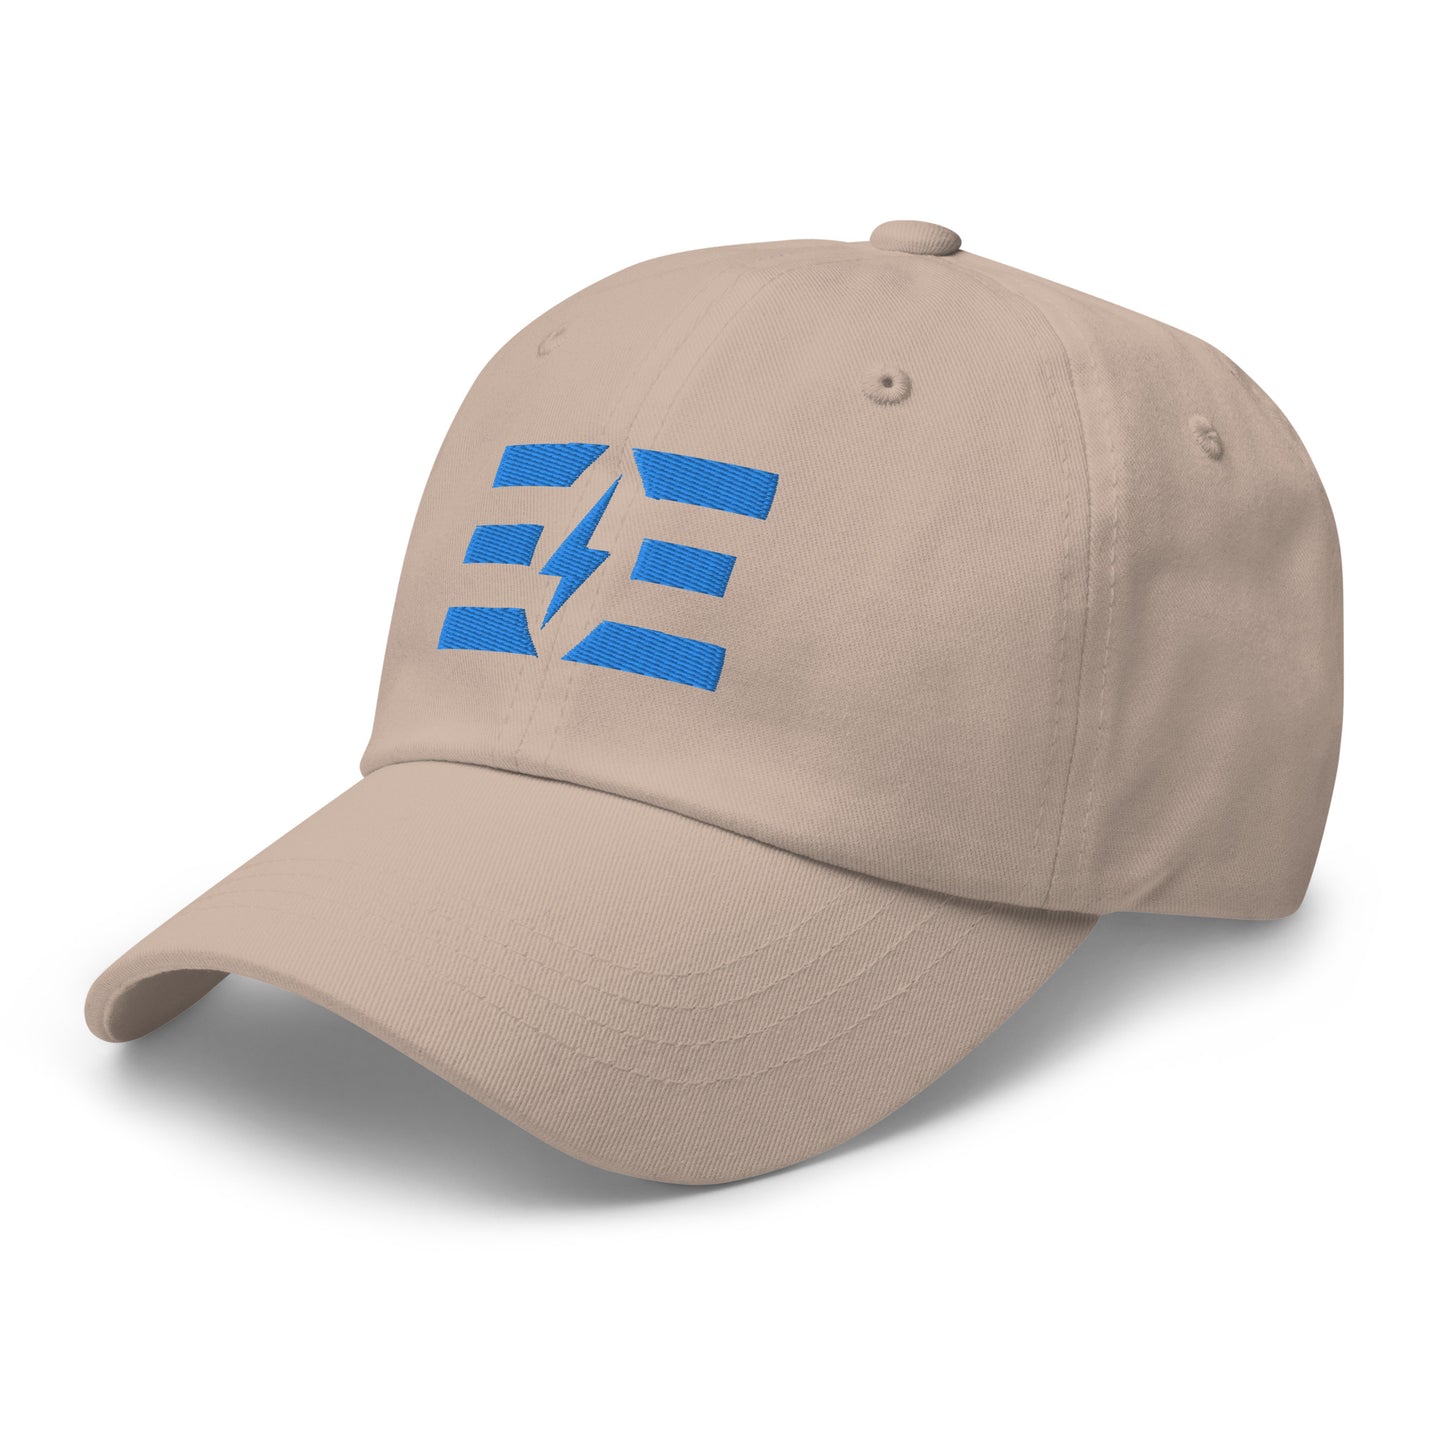 Endurance eSports Dad Hat - Electric Teal